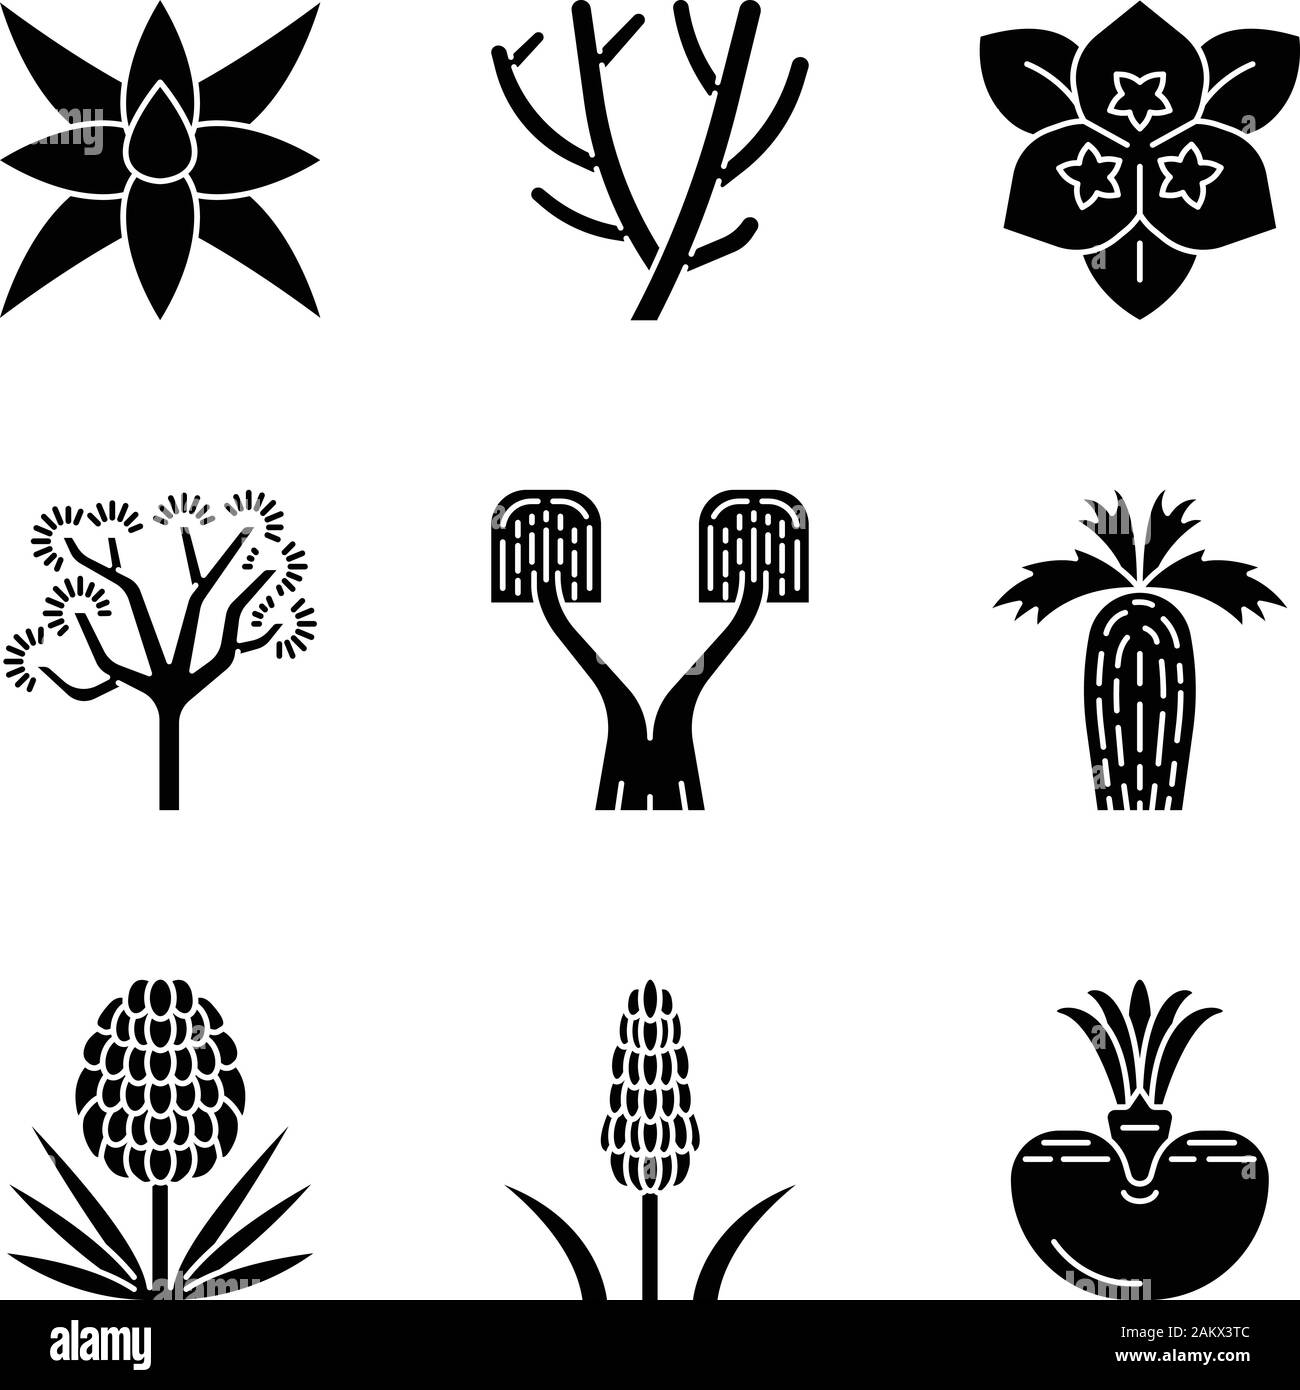 Wüstenpflanzen Glyphe Symbole gesetzt. Exotischen Pflanzen. Yuccas, Kakteen, Palmen, Agaven, Bush. Dekorative Trockenheit resistenten Pflanzen. Silhouette Symbole. Vektor isolat Stock Vektor